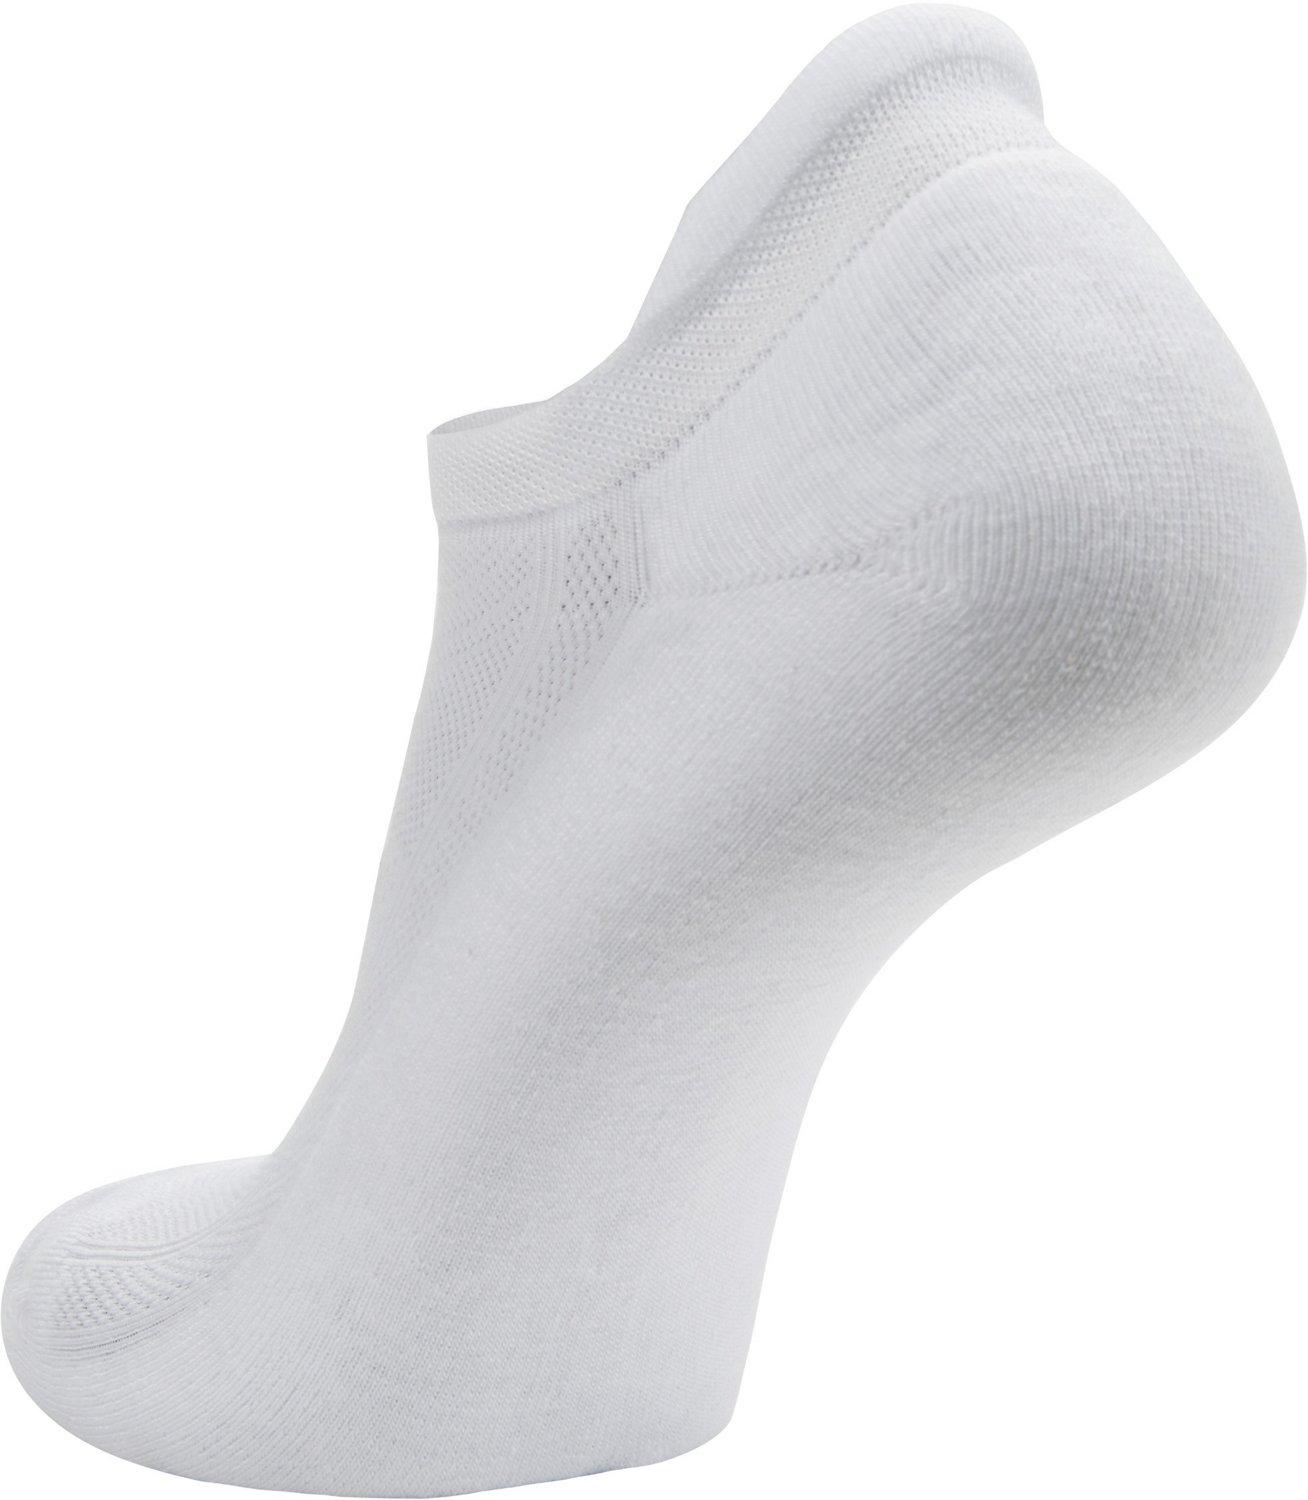 Balega Hidden Comfort No Show Socks | Free Shipping at Academy